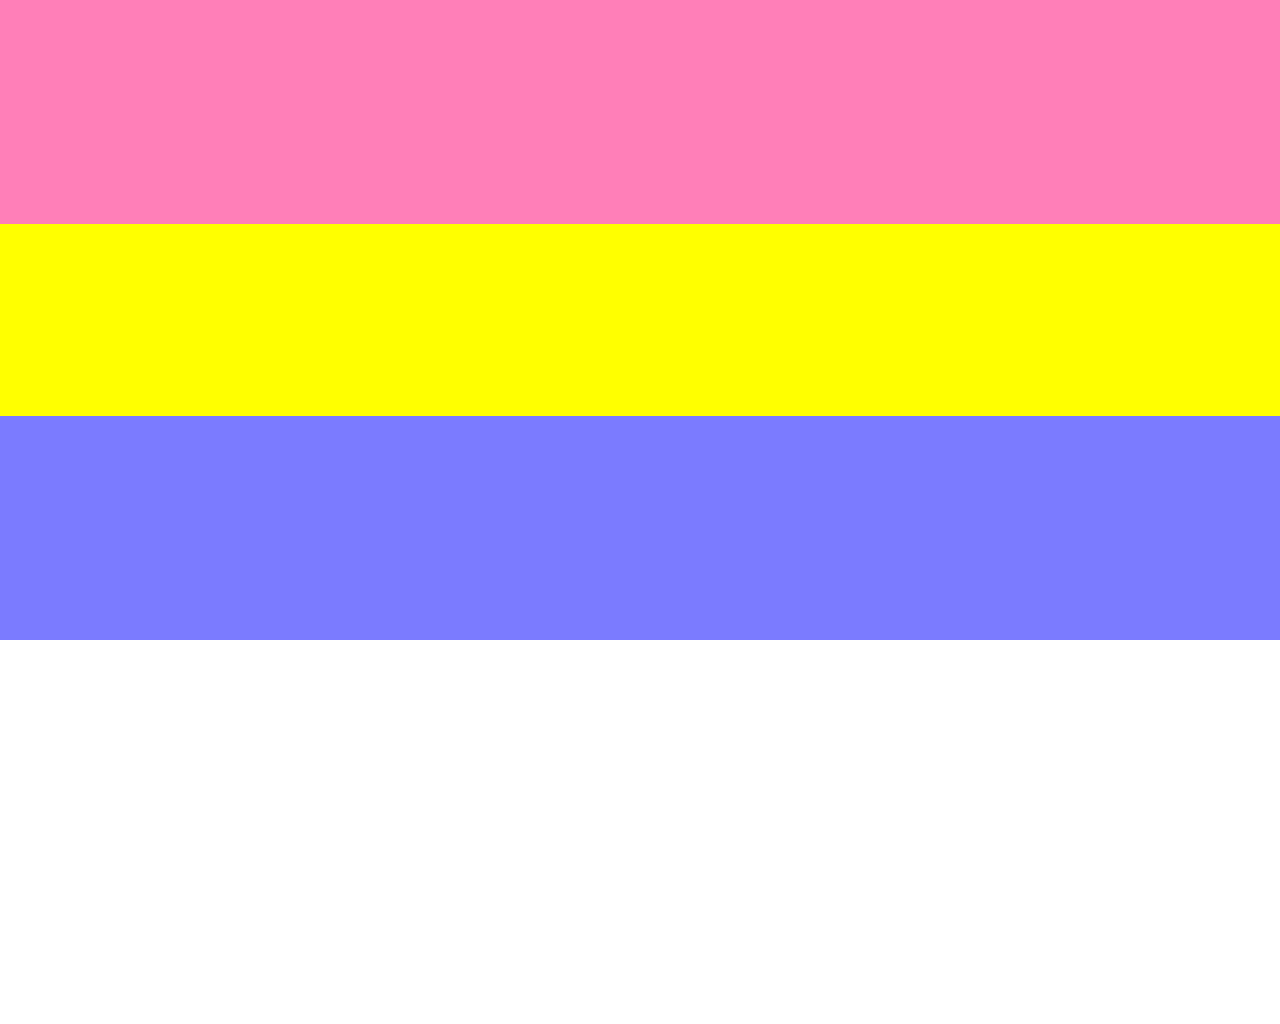 Pansexual pride flag pixel art